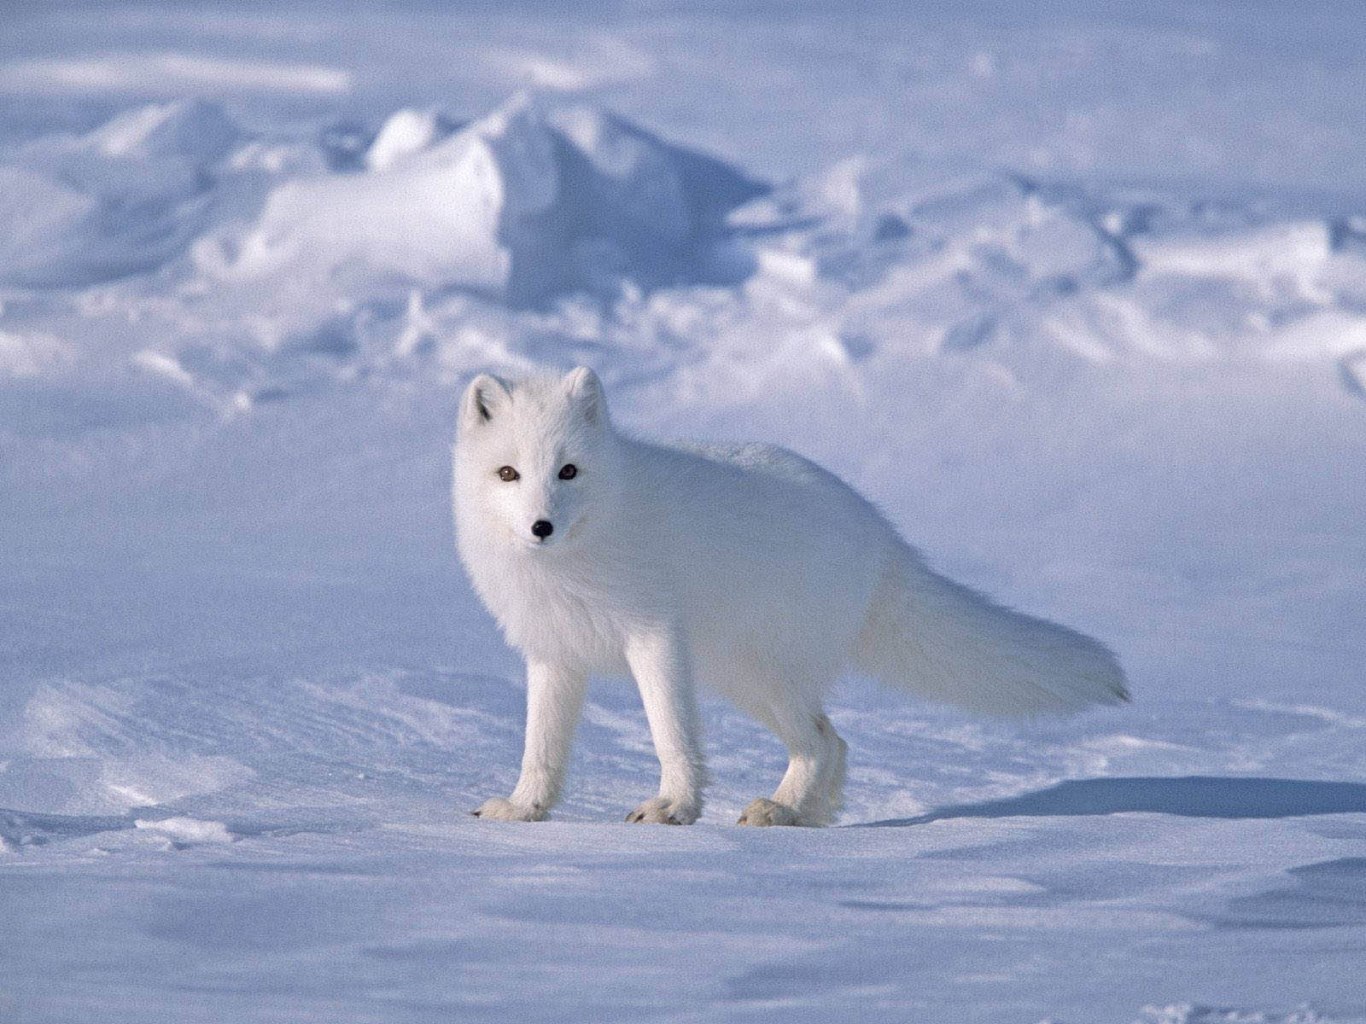 Princess of Iceland - the Arctic fox.